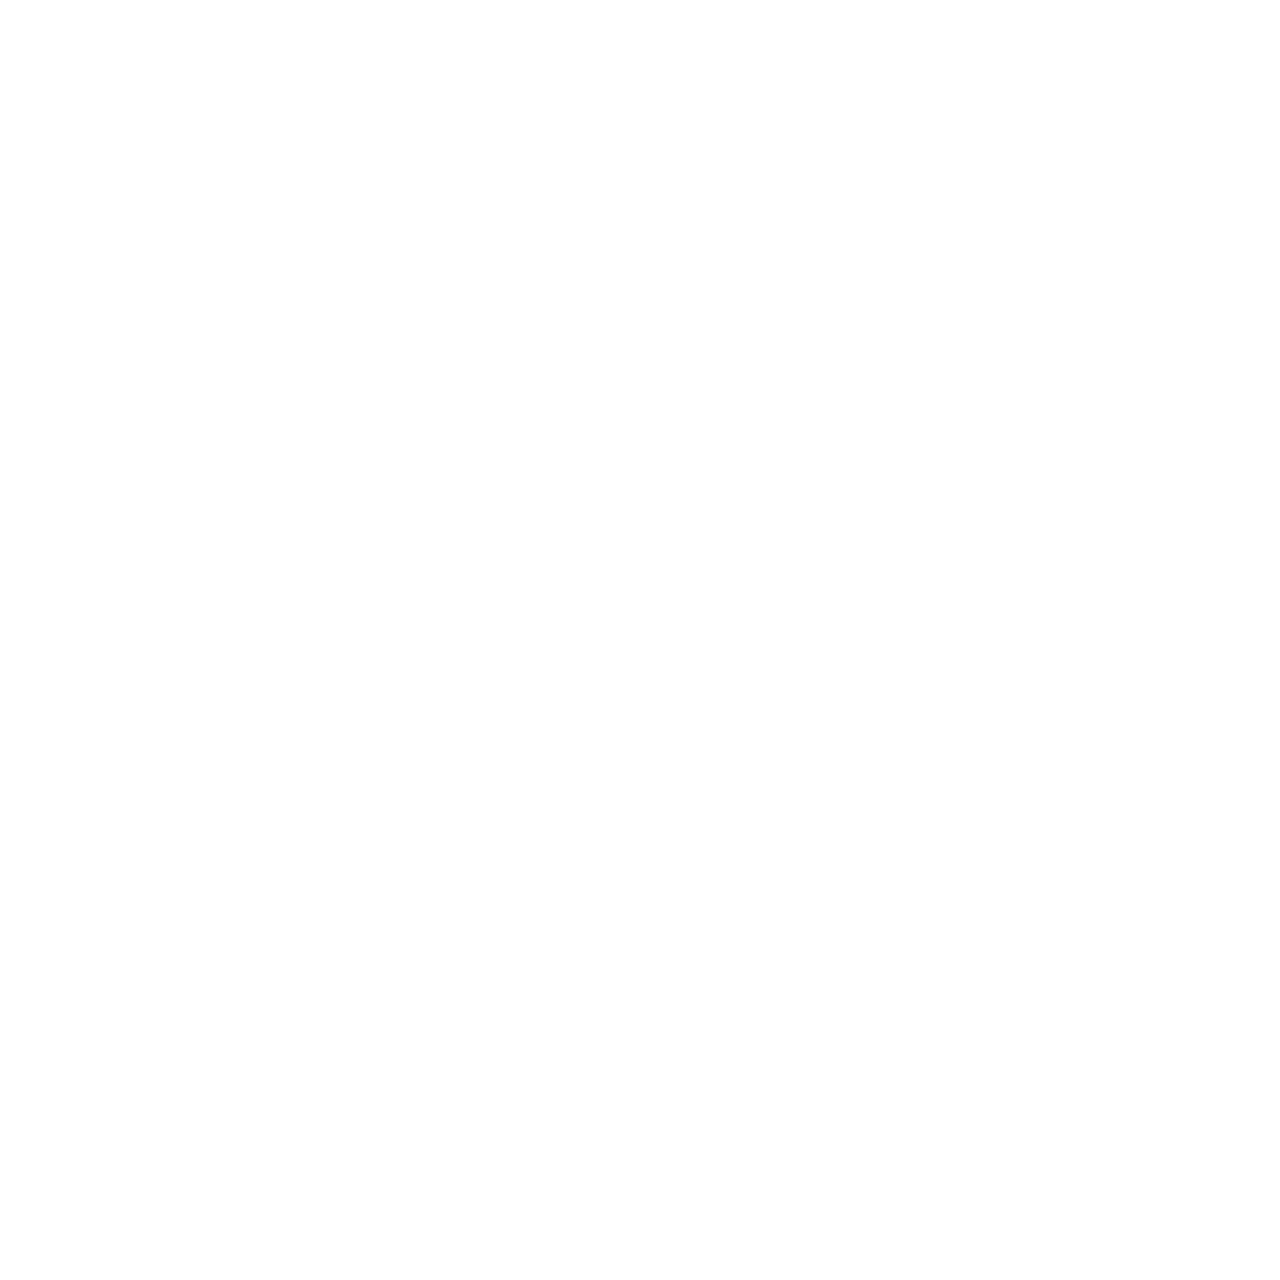 FIVB